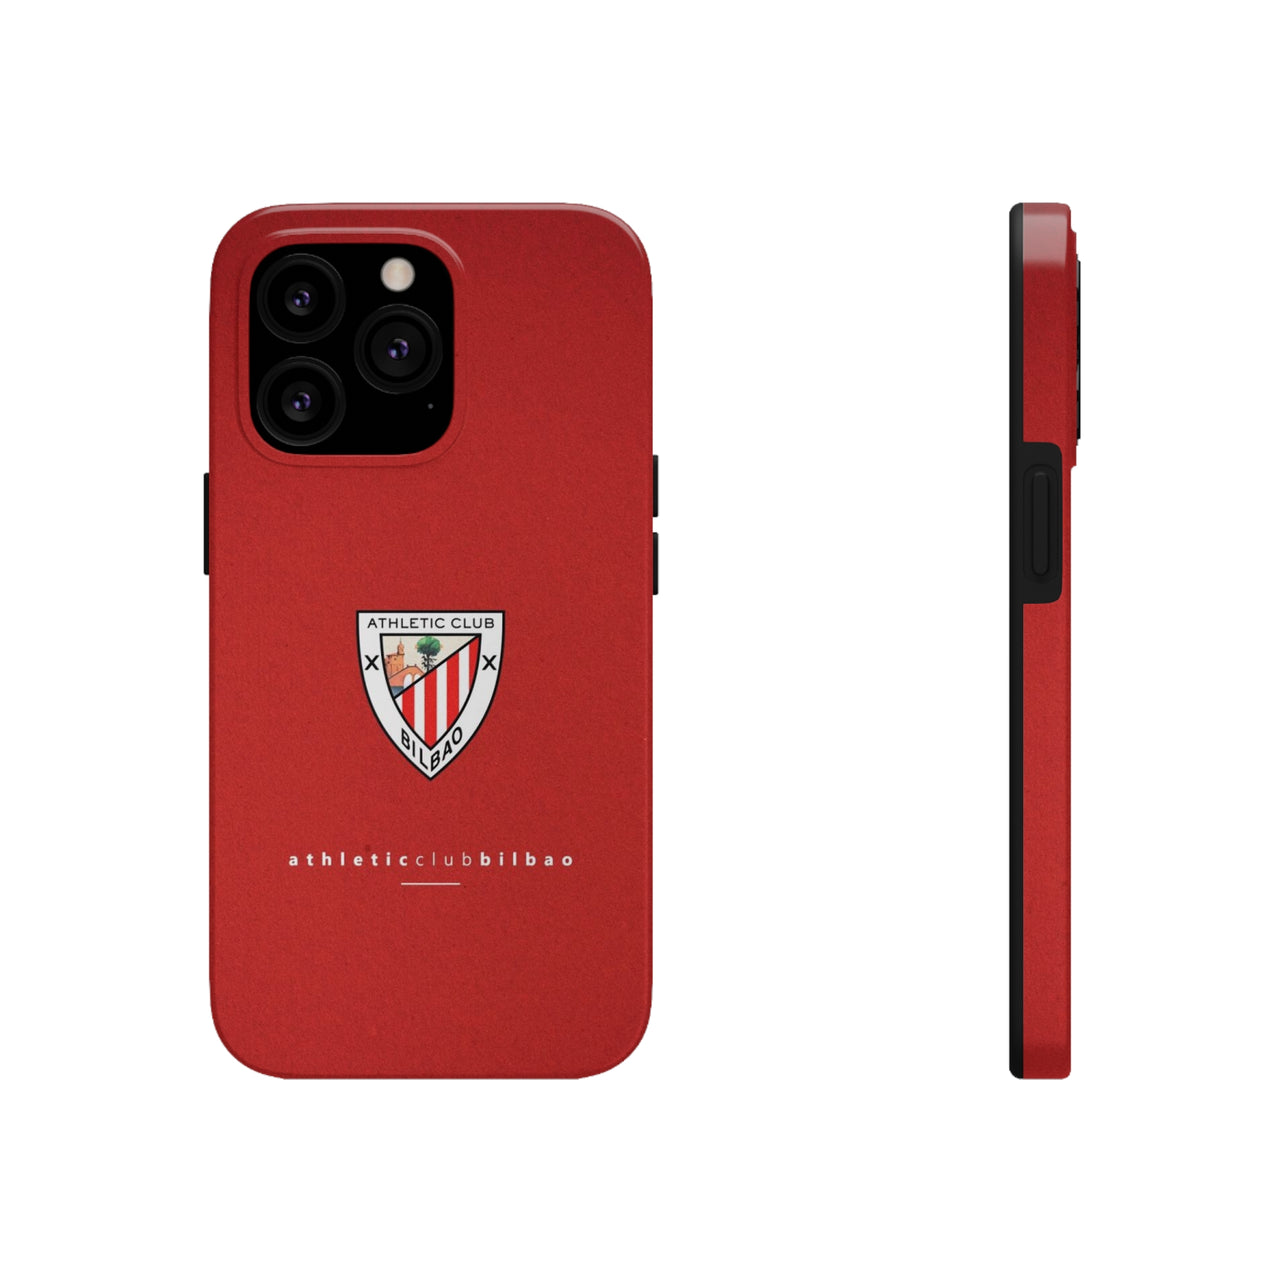 Athletic Bilbao Tough Phone Cases